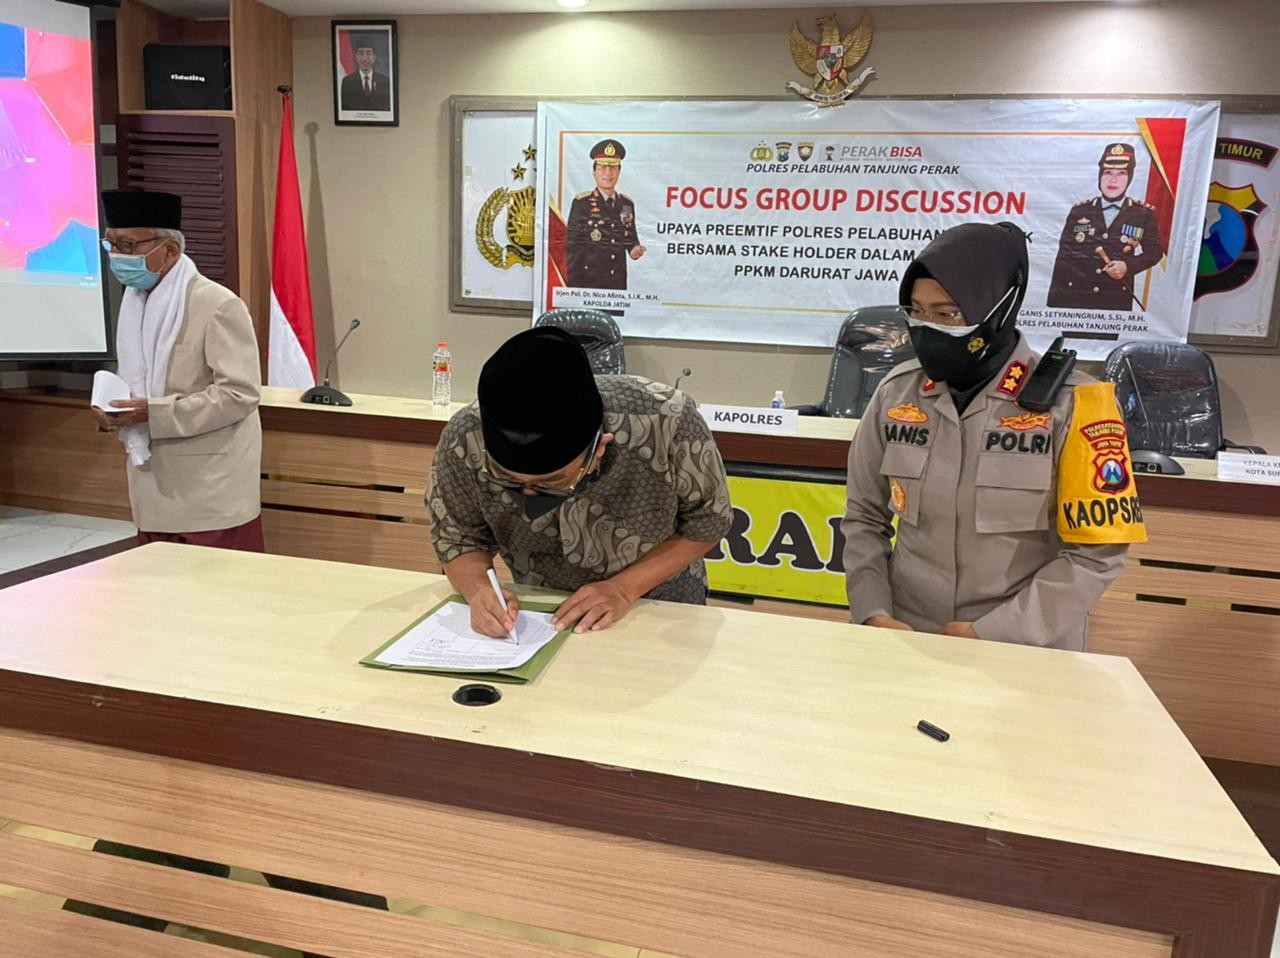 Ketua DMI Surabaya Arif Afandi tanda tangan pernyataan bersama. Isinya mendukung sepenuhnya pelaksanaan PPKM Darurat yang berlangsung sejak 3 juli sampai 20 Juli mendatang. (Foto: Istimewa)